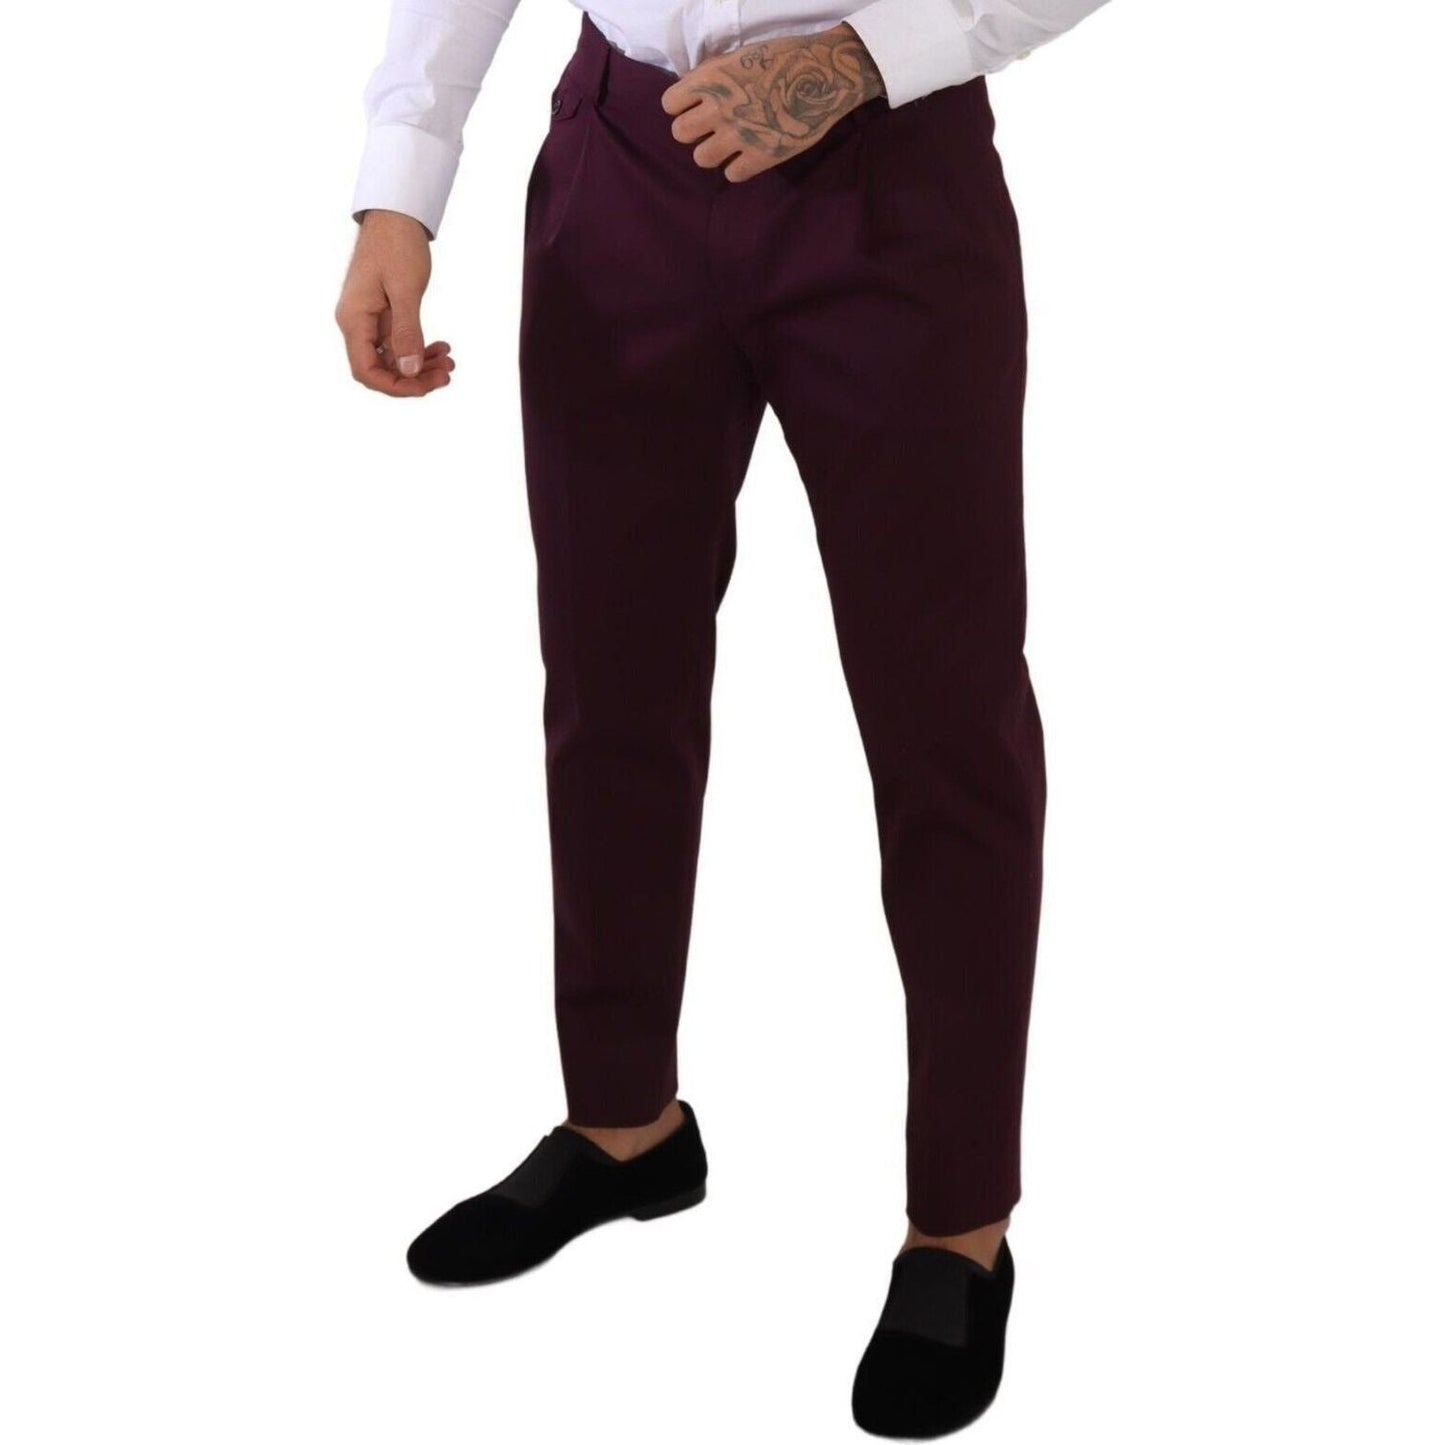 Dolce & Gabbana Elegant Purple Chinos for the Modern Man purple-cotton-tapered-chinos-dress-pants s-l1600-3-140-99bde529-932.jpg